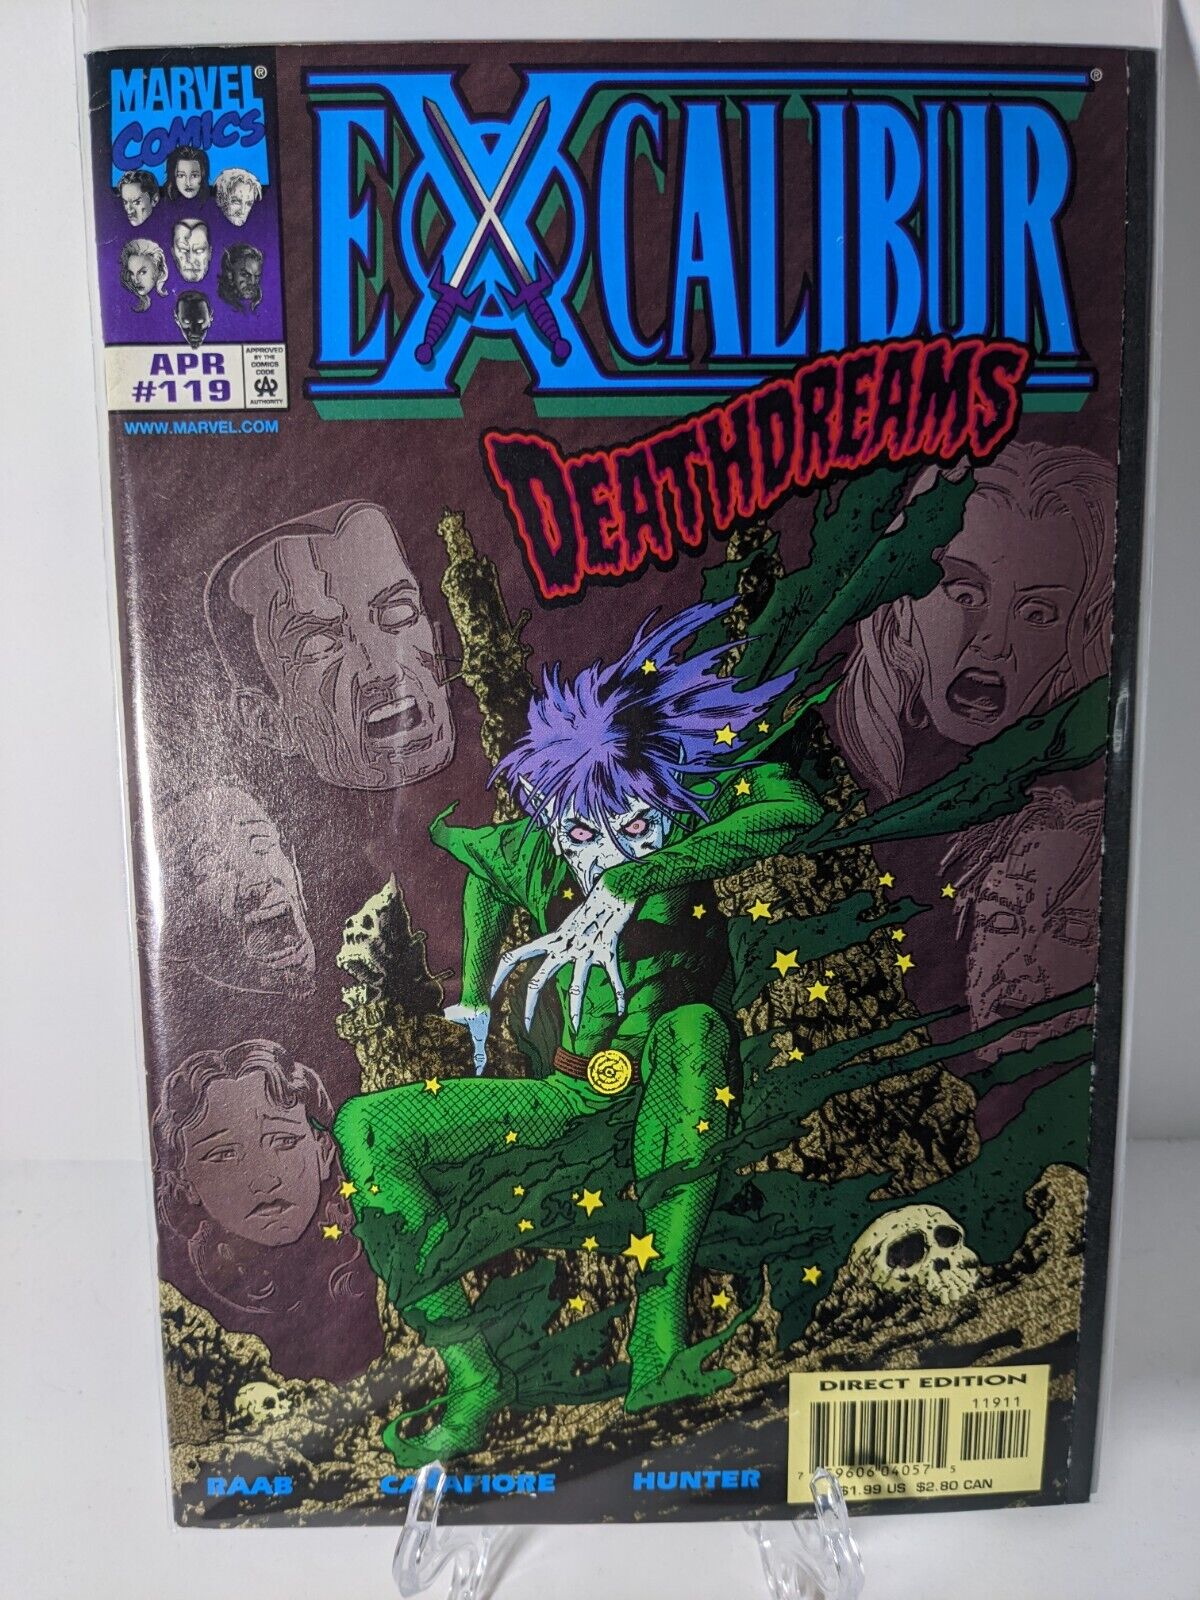 Excalibur #110 (1997), Death dreams, Marvel Comics, 12 PICTURES ======